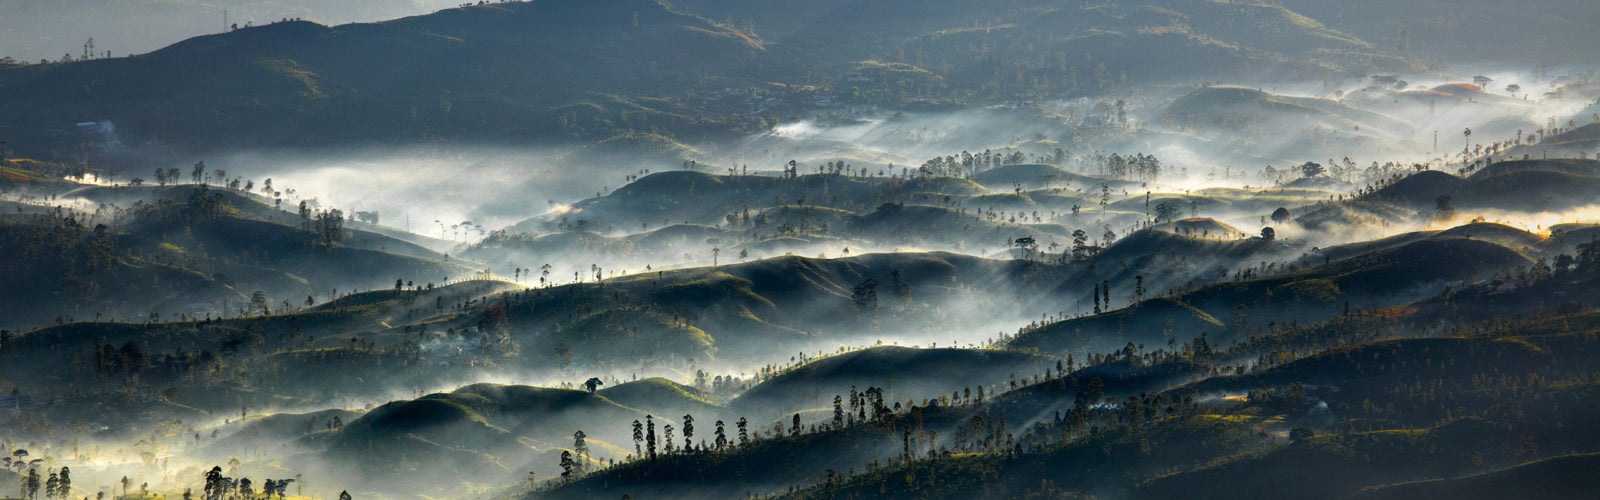 tea-plantations-sri-lanka-misty